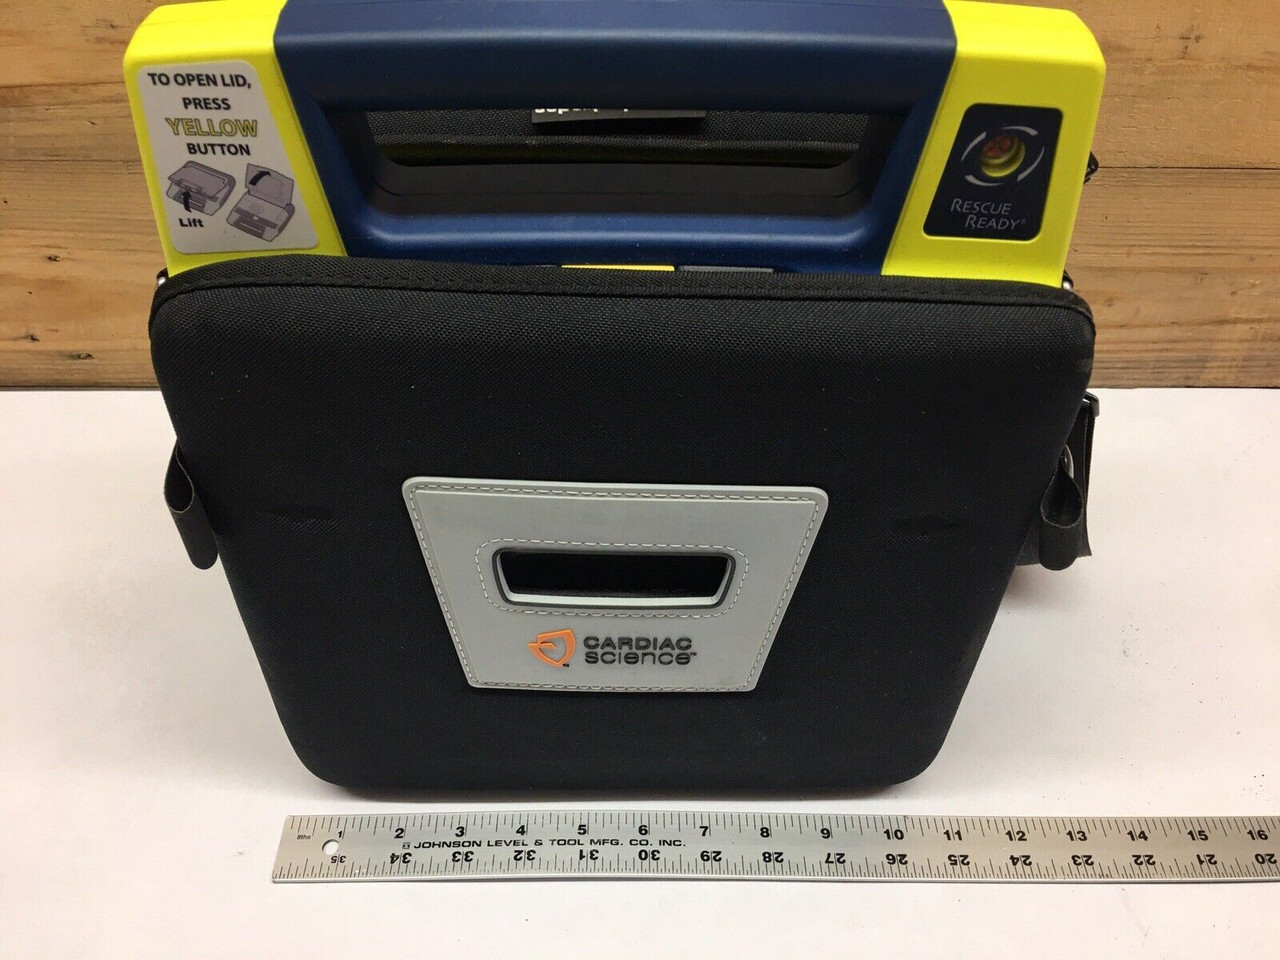 PowerHeart AED G3 Defibrillator Cardiac Science With Black Case